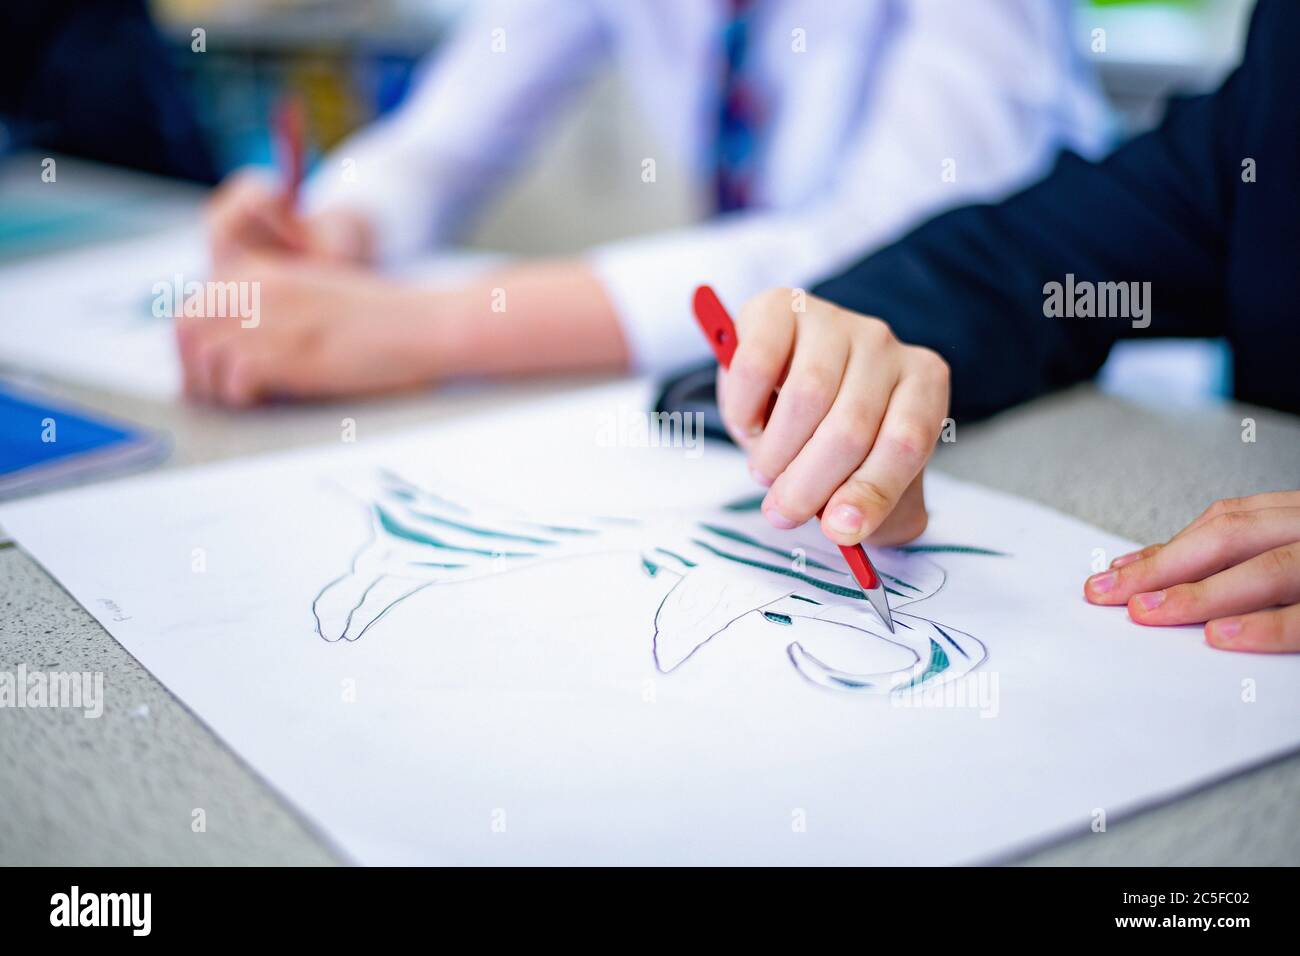 School Art Class - Cutting Using A Scalpel On Paper Stock Photo